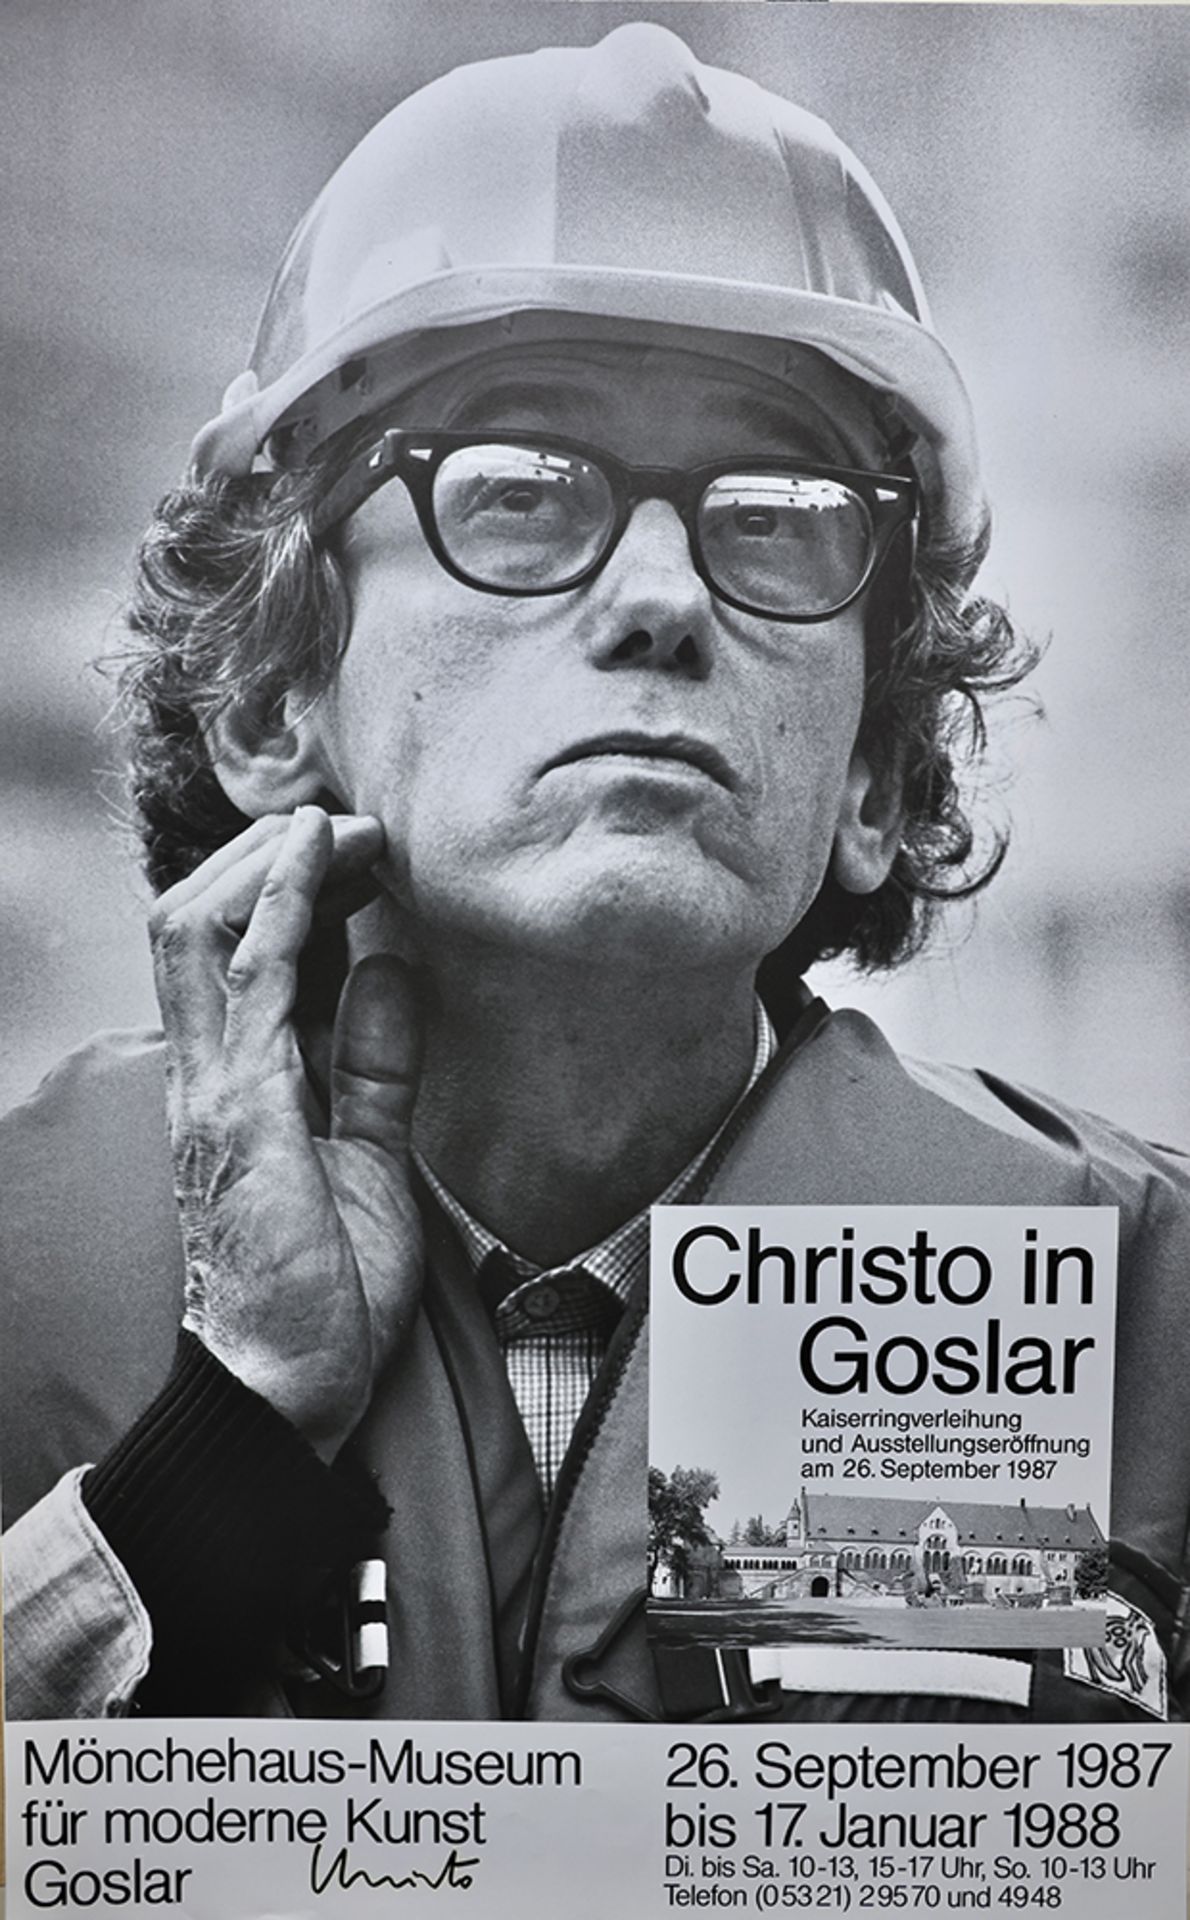 Christo 1935-2020